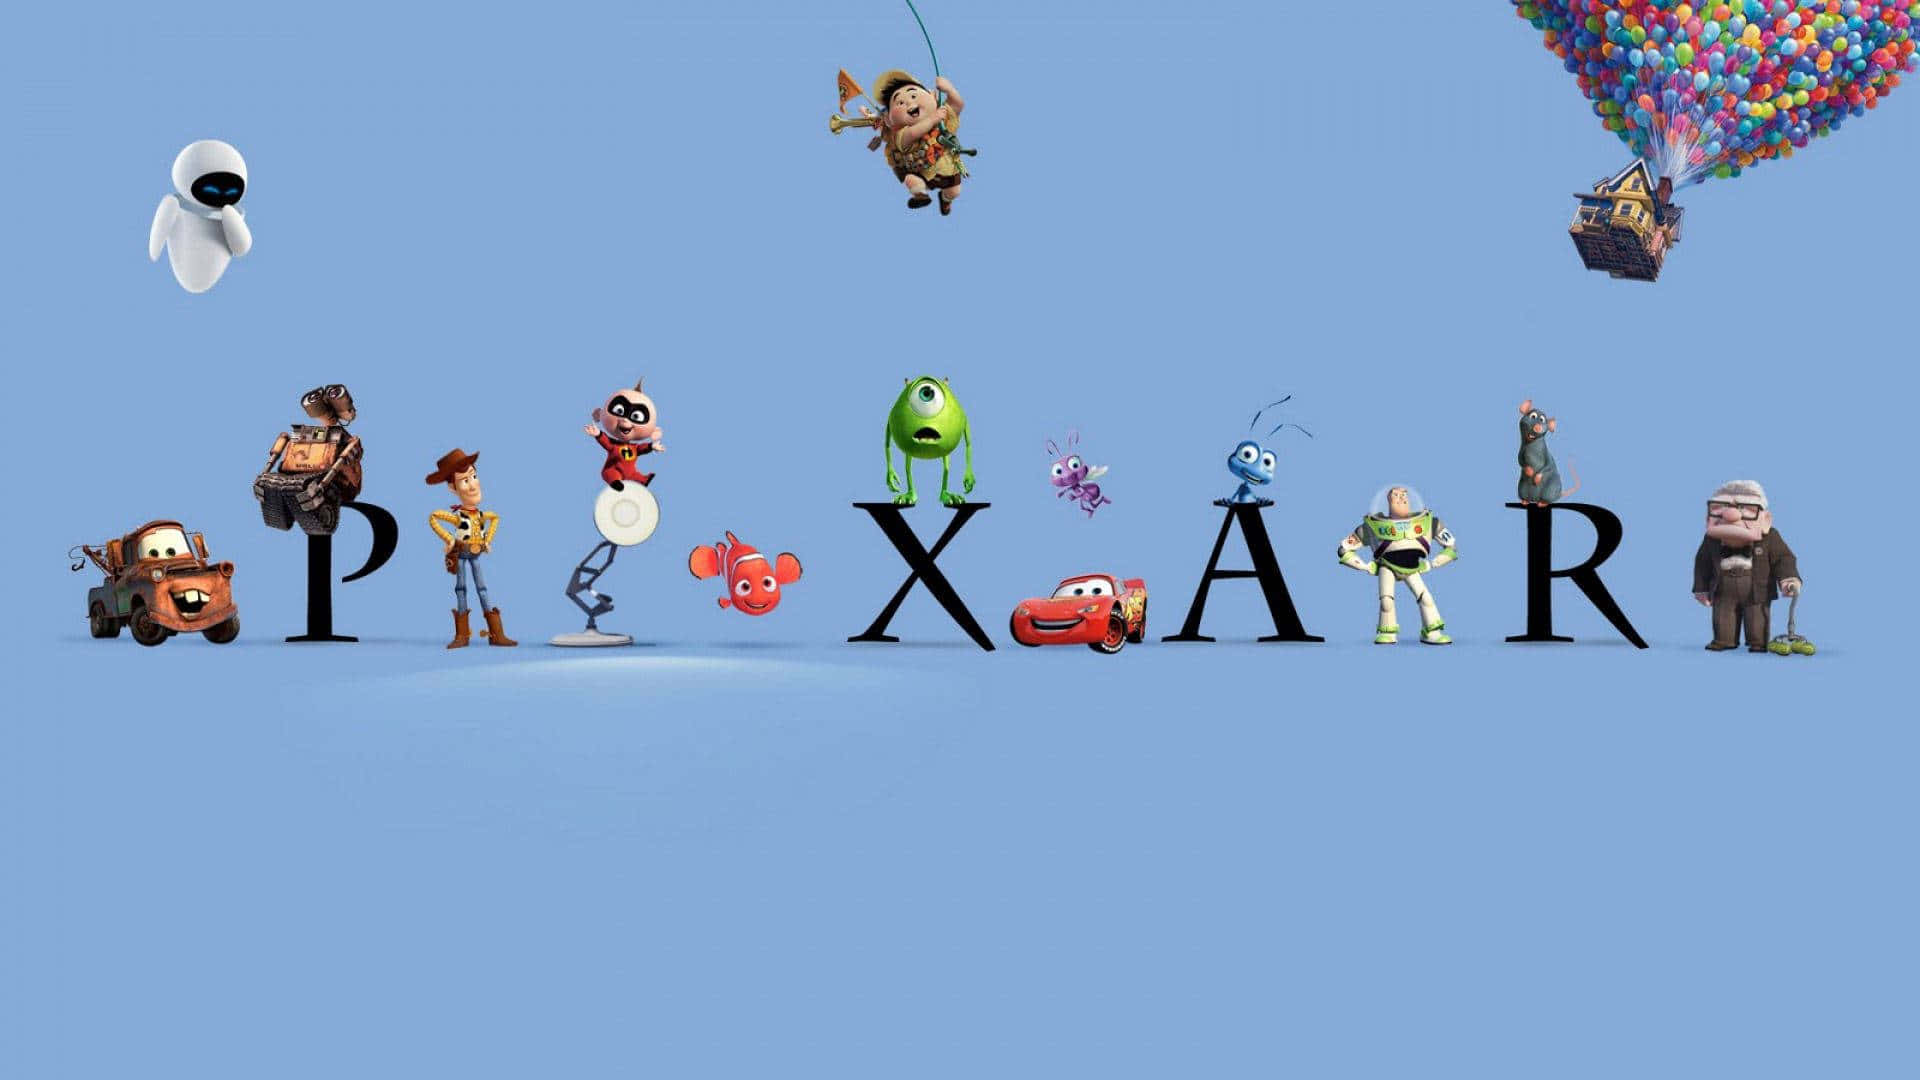 Pixar Wallpapers Hd